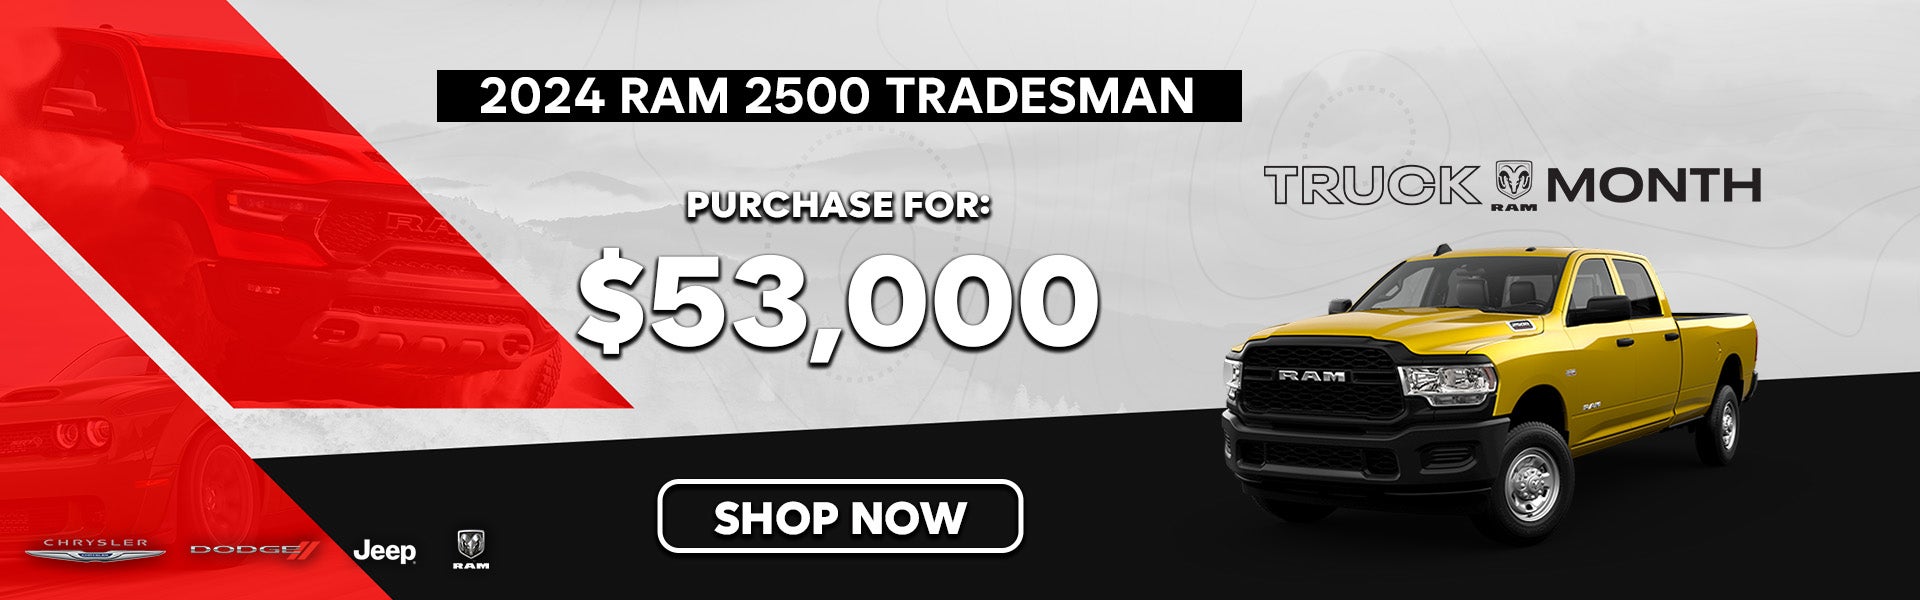 2024 Ram 2500 Tradesman Special Offer